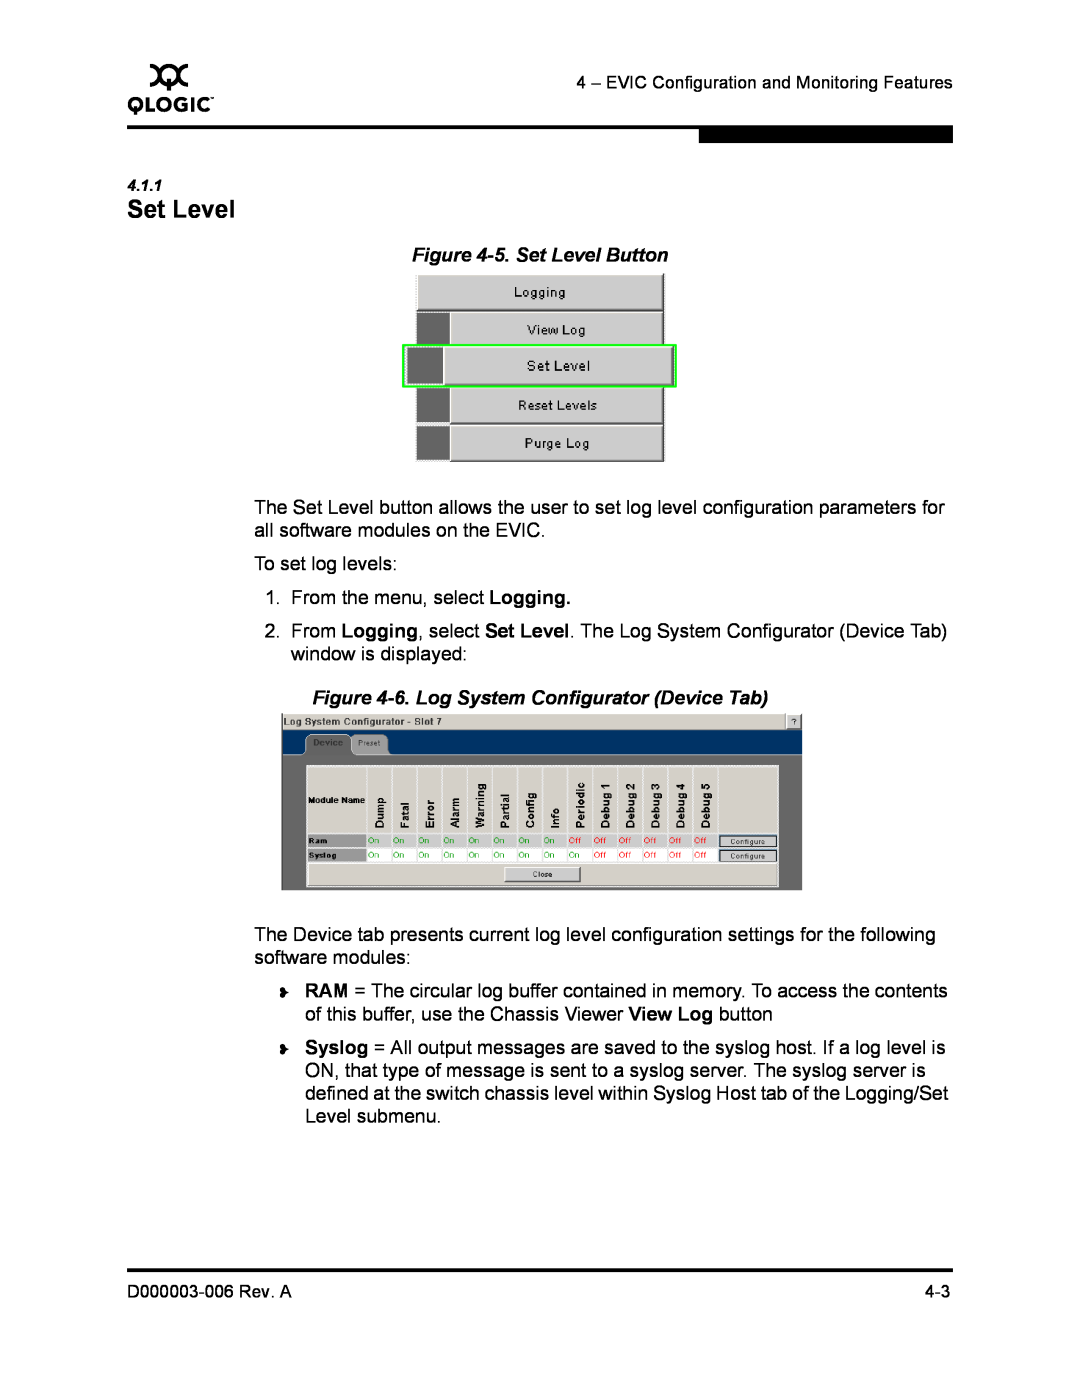 Q-Logic 9000 manual 5. Set Level Button, 6. Log System Configurator Device Tab 